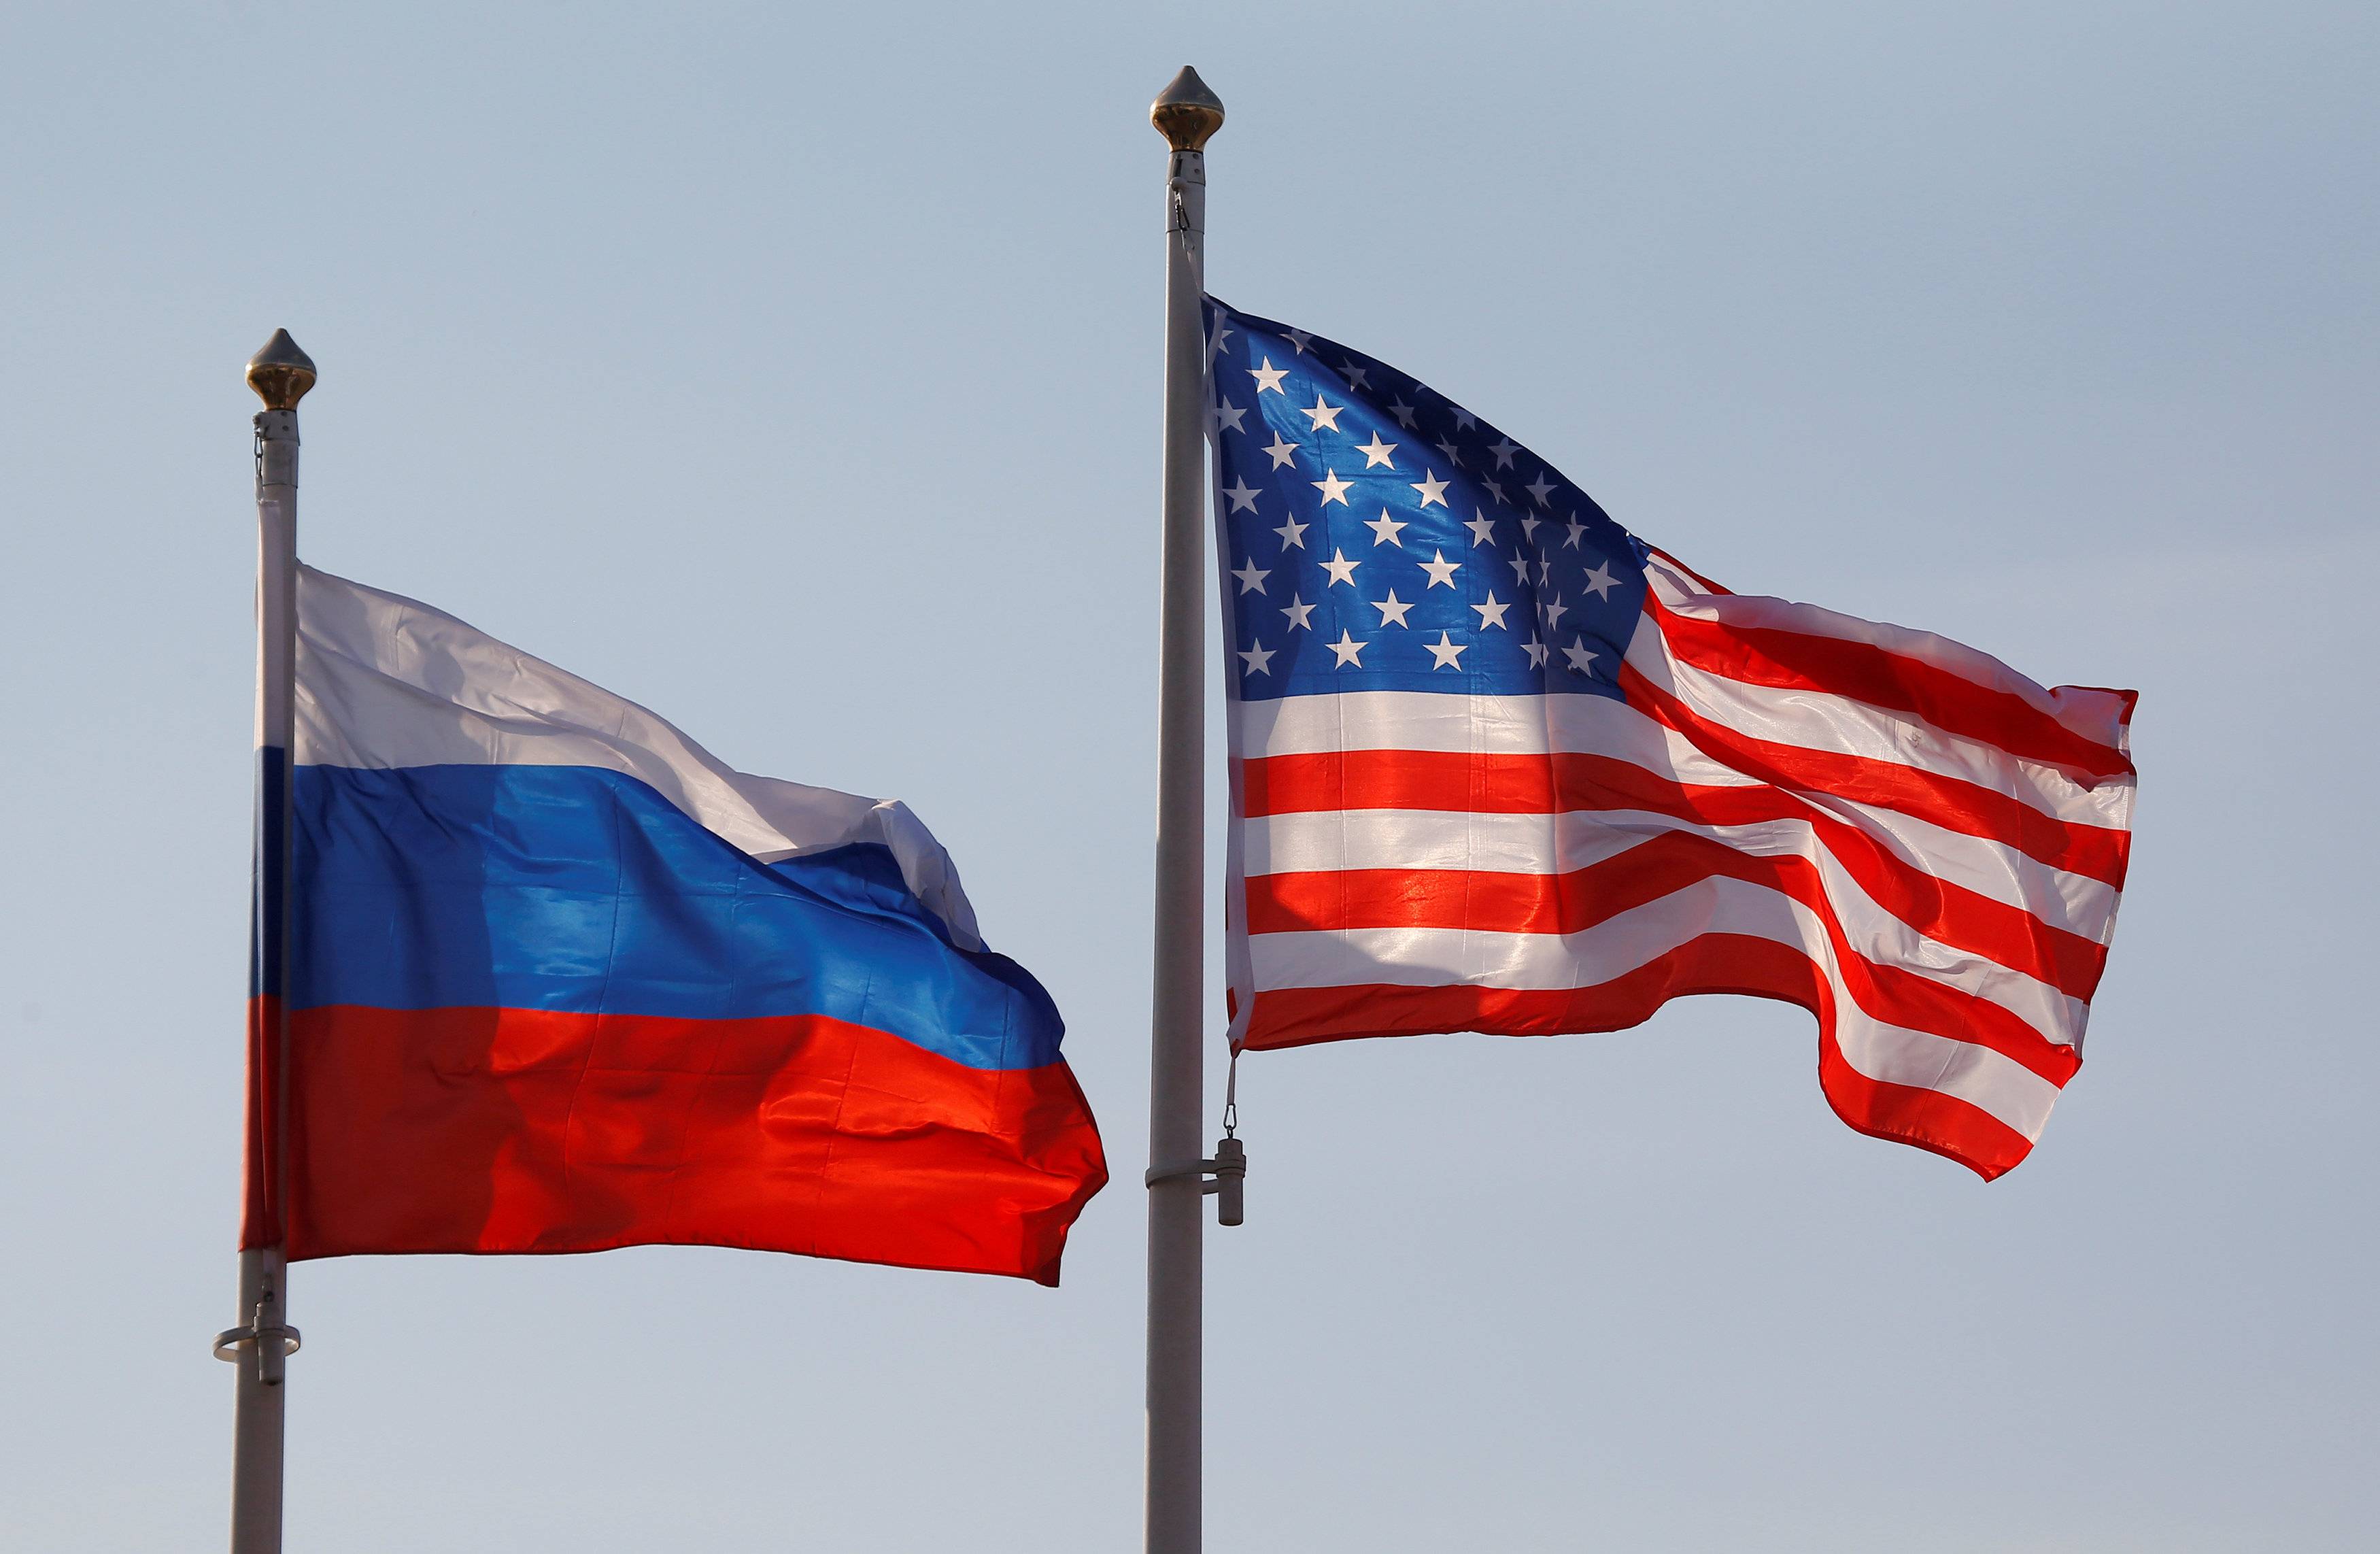 American in russia. Флаг Федерации США. Россия и США. Флаг России и США. Российский и американский флаги.